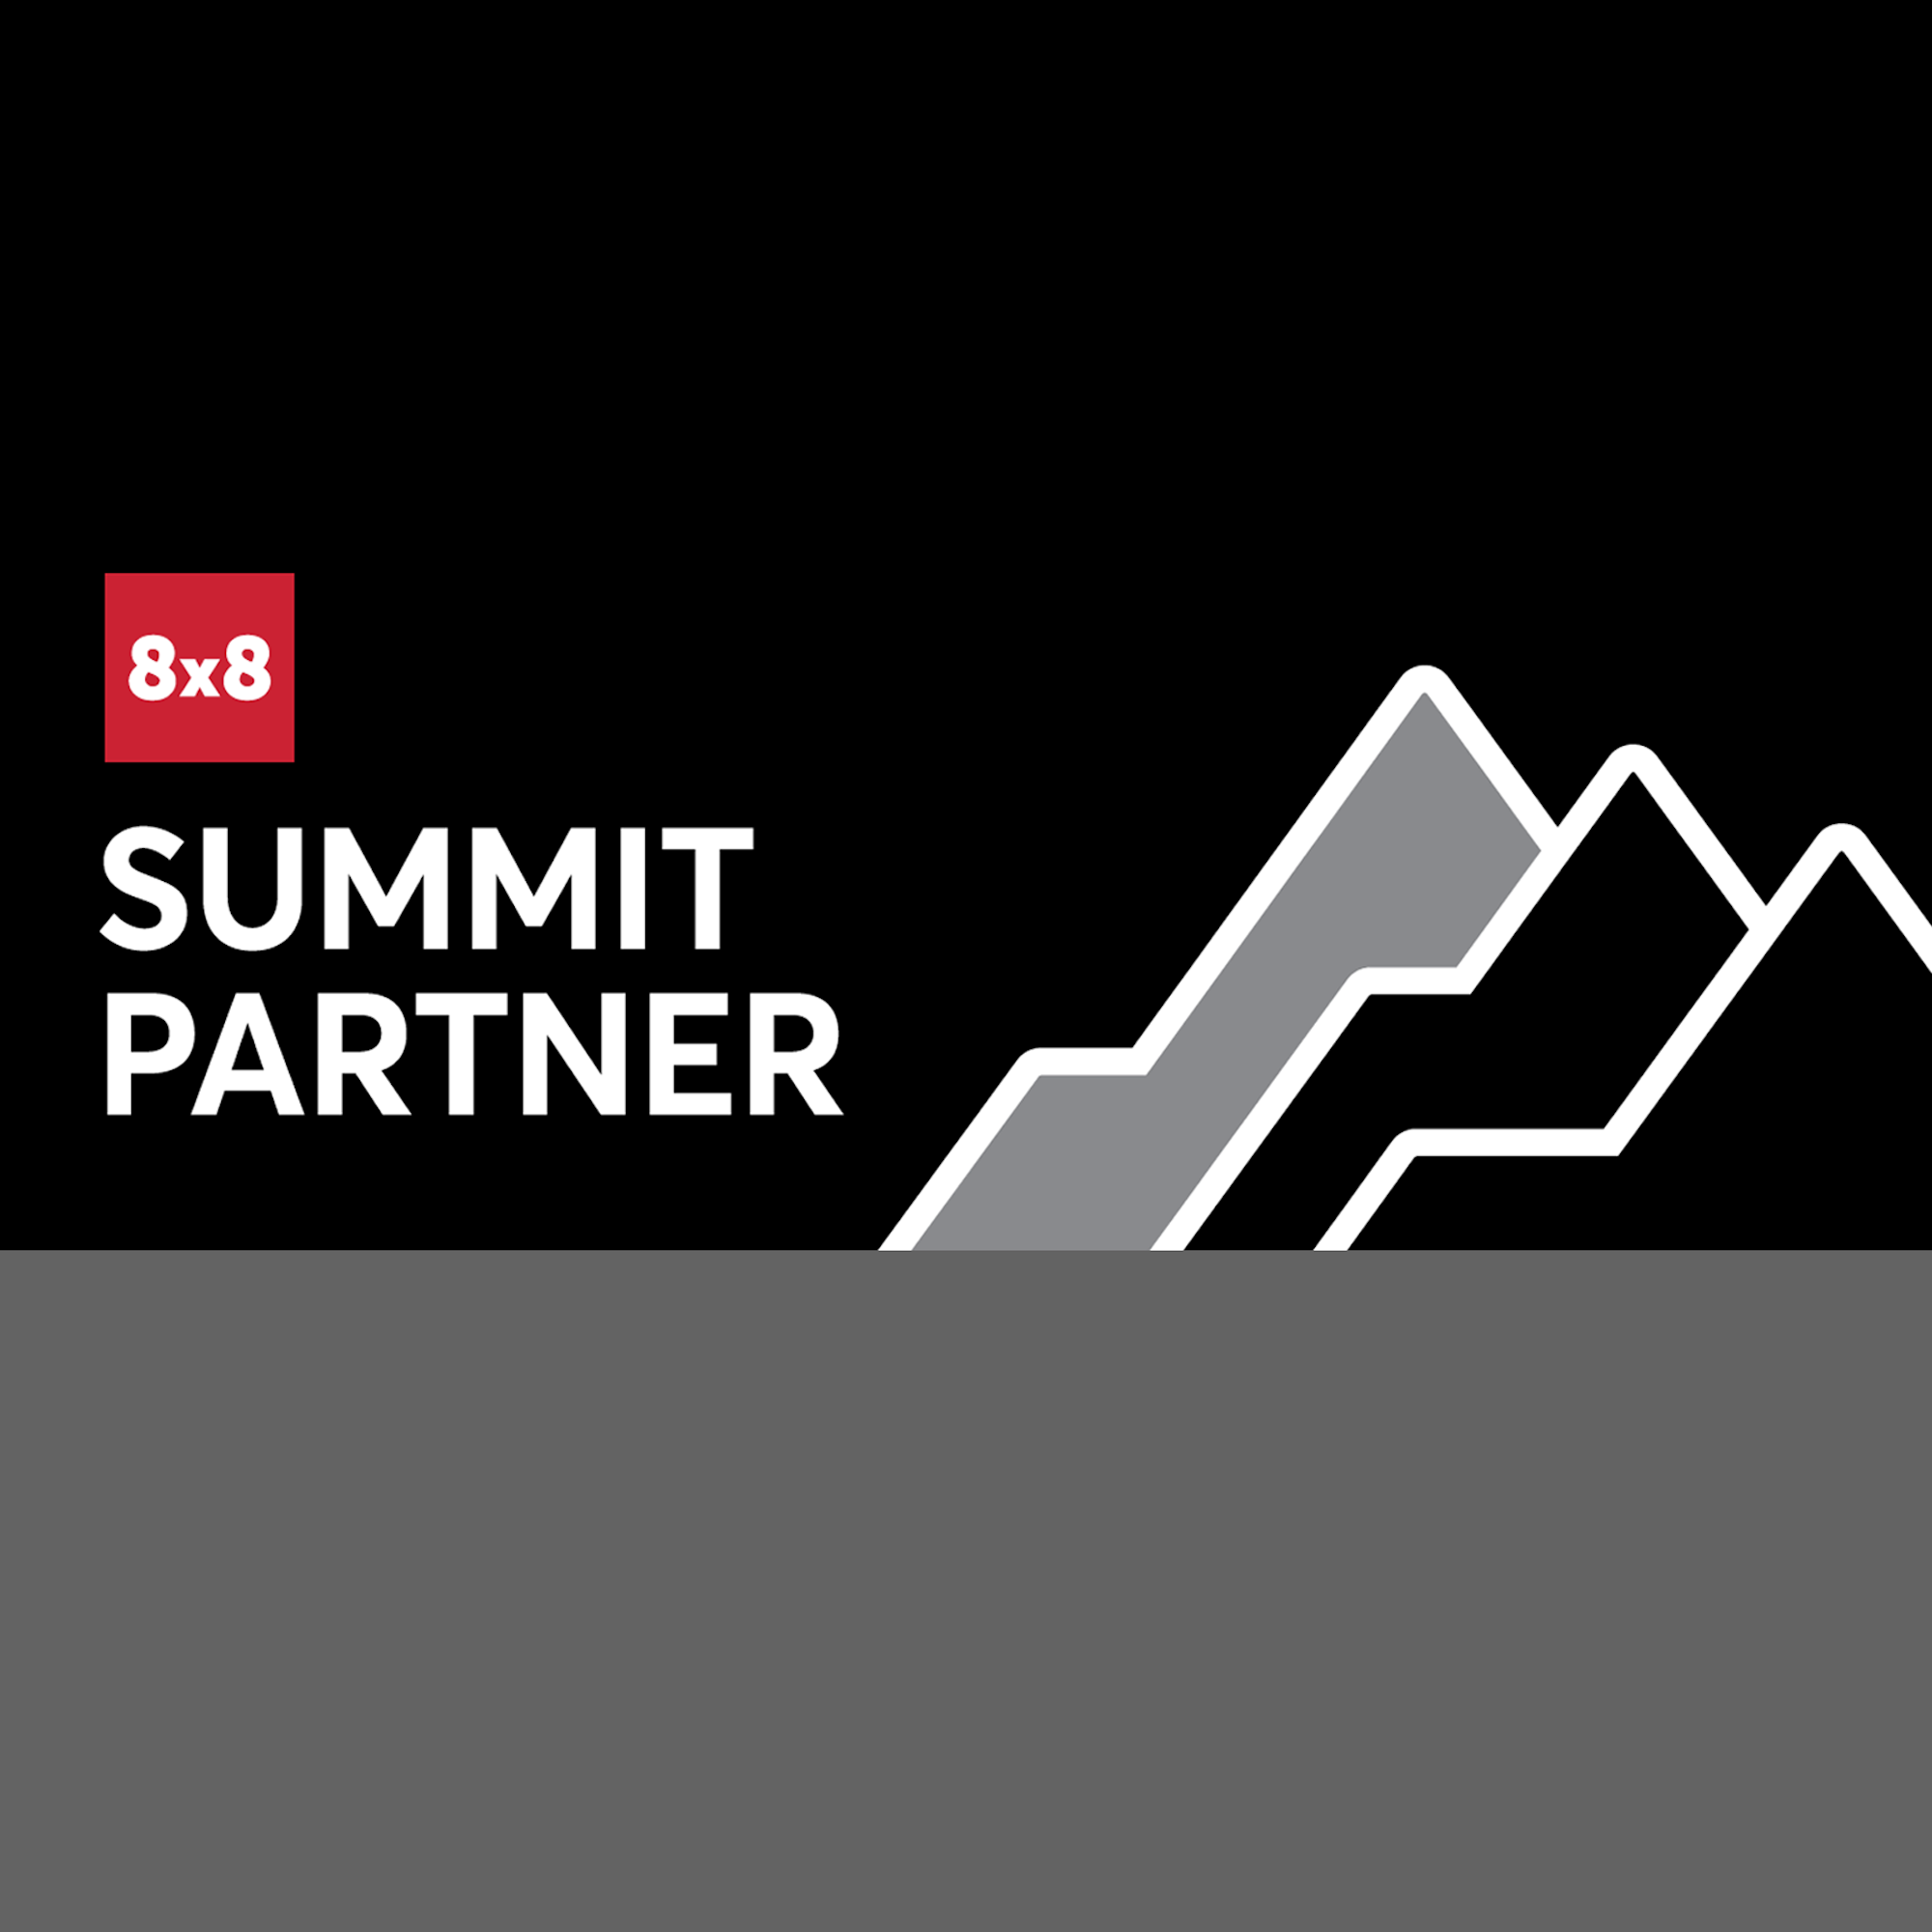 Britannic 8x8 Summit Partner Award Graphic